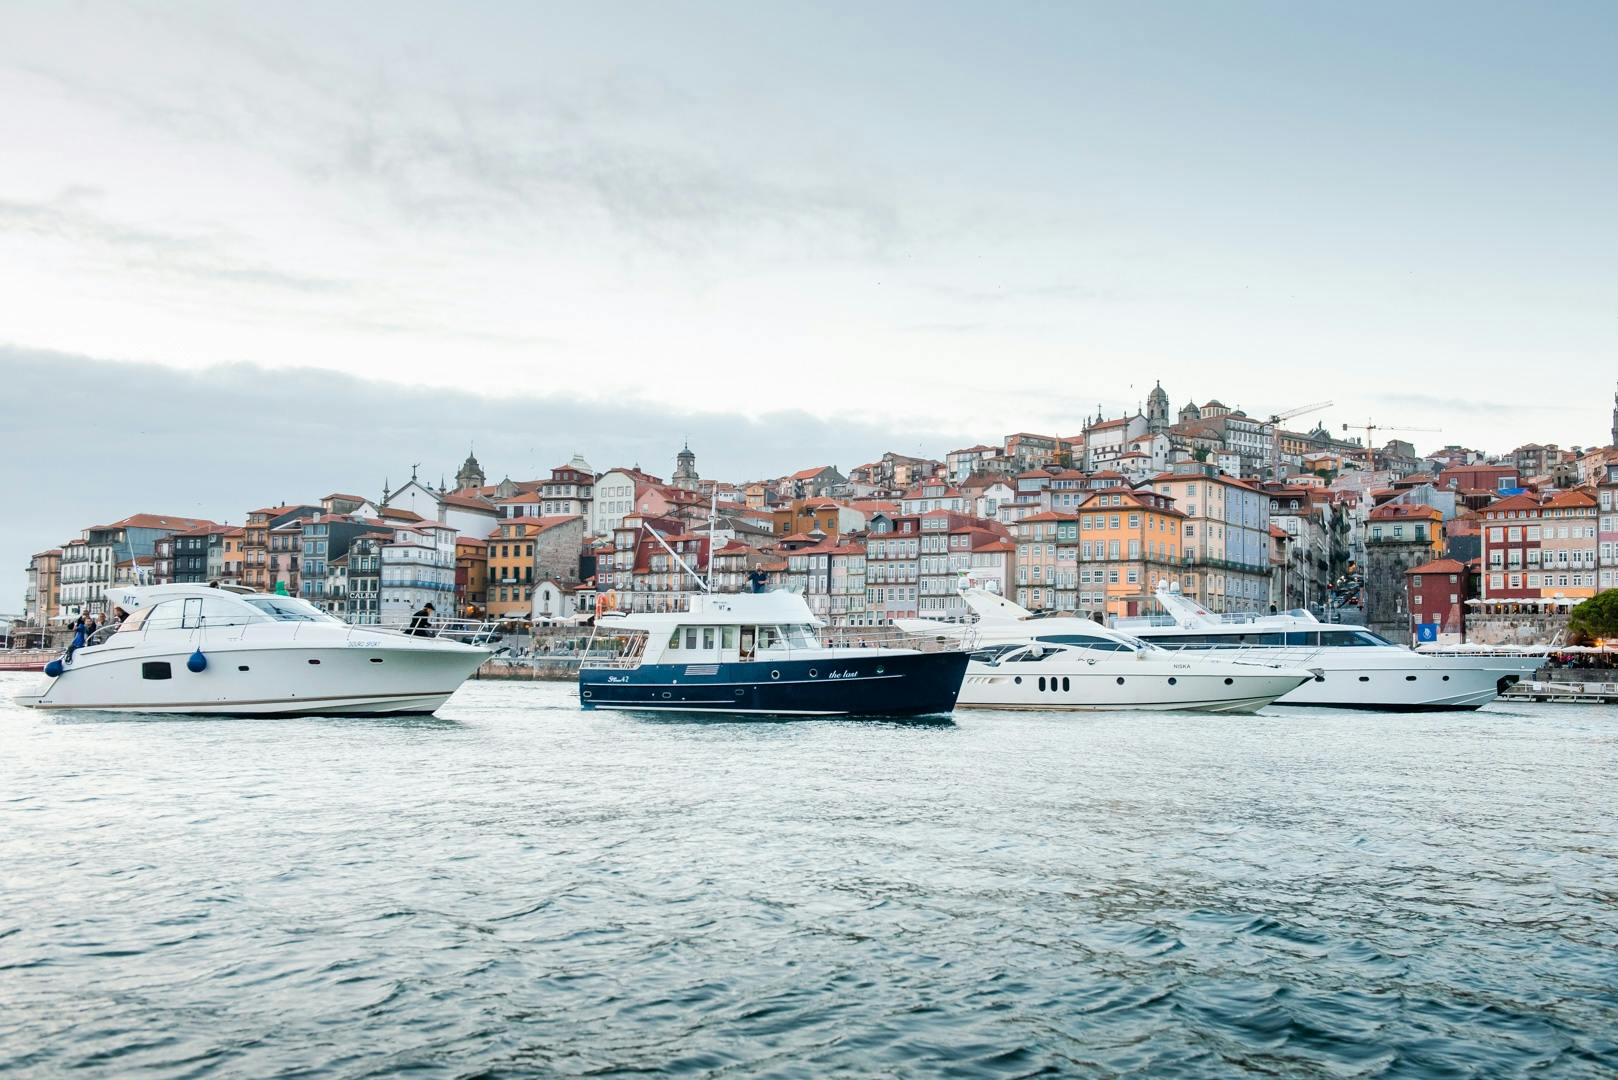 Privéjachtcharter op de rivier de Douro vanuit Porto